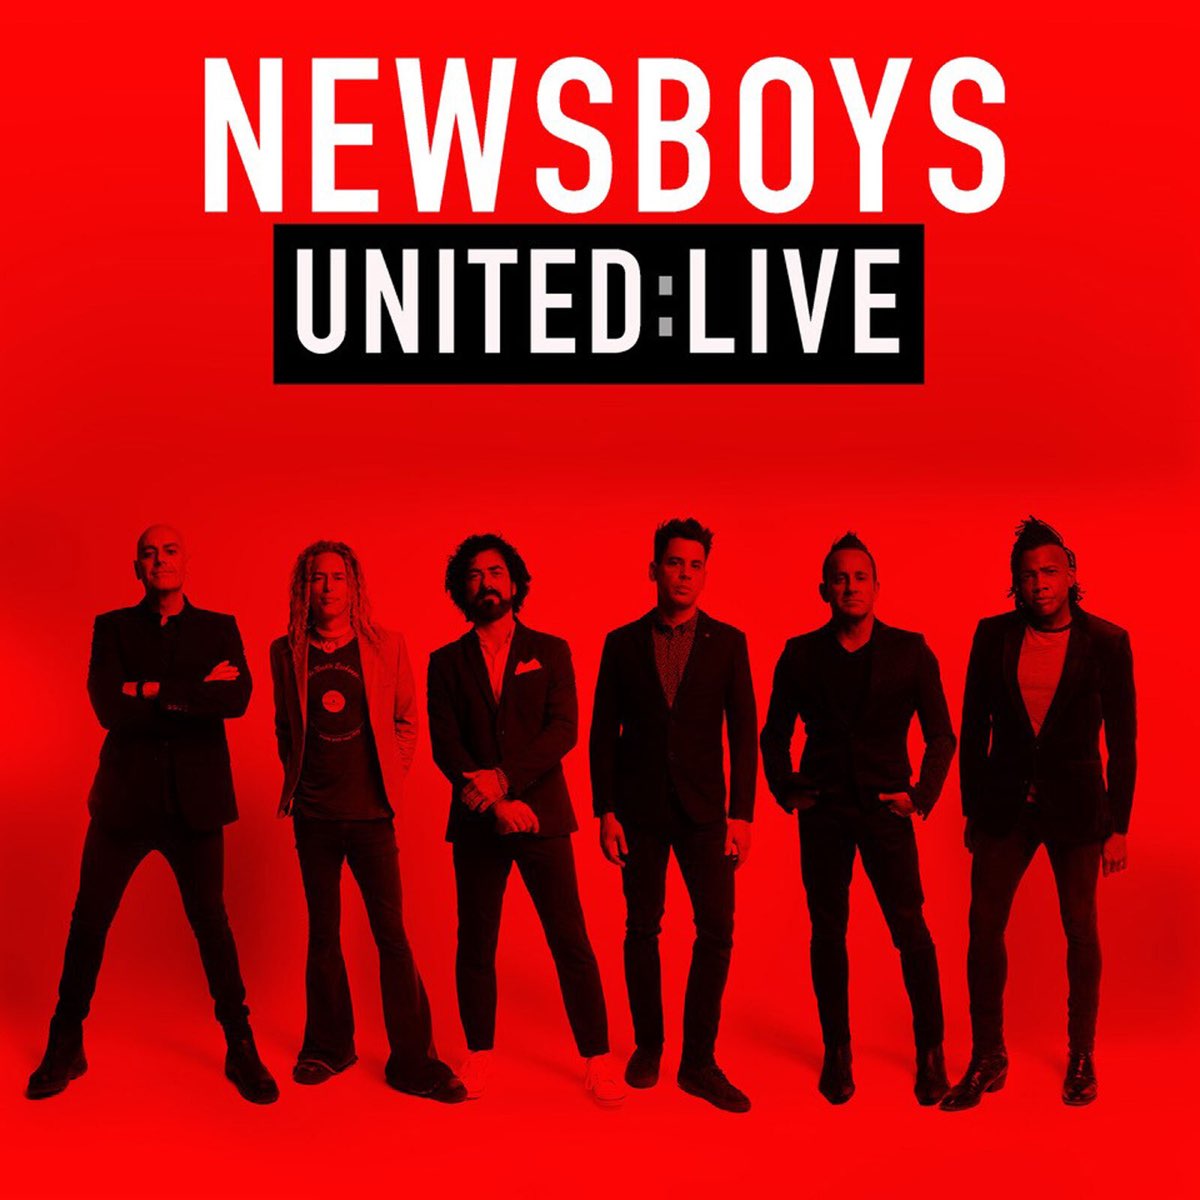 Newsboys Live. Newsboys. Newsboys Live Houston. Unite to live личный